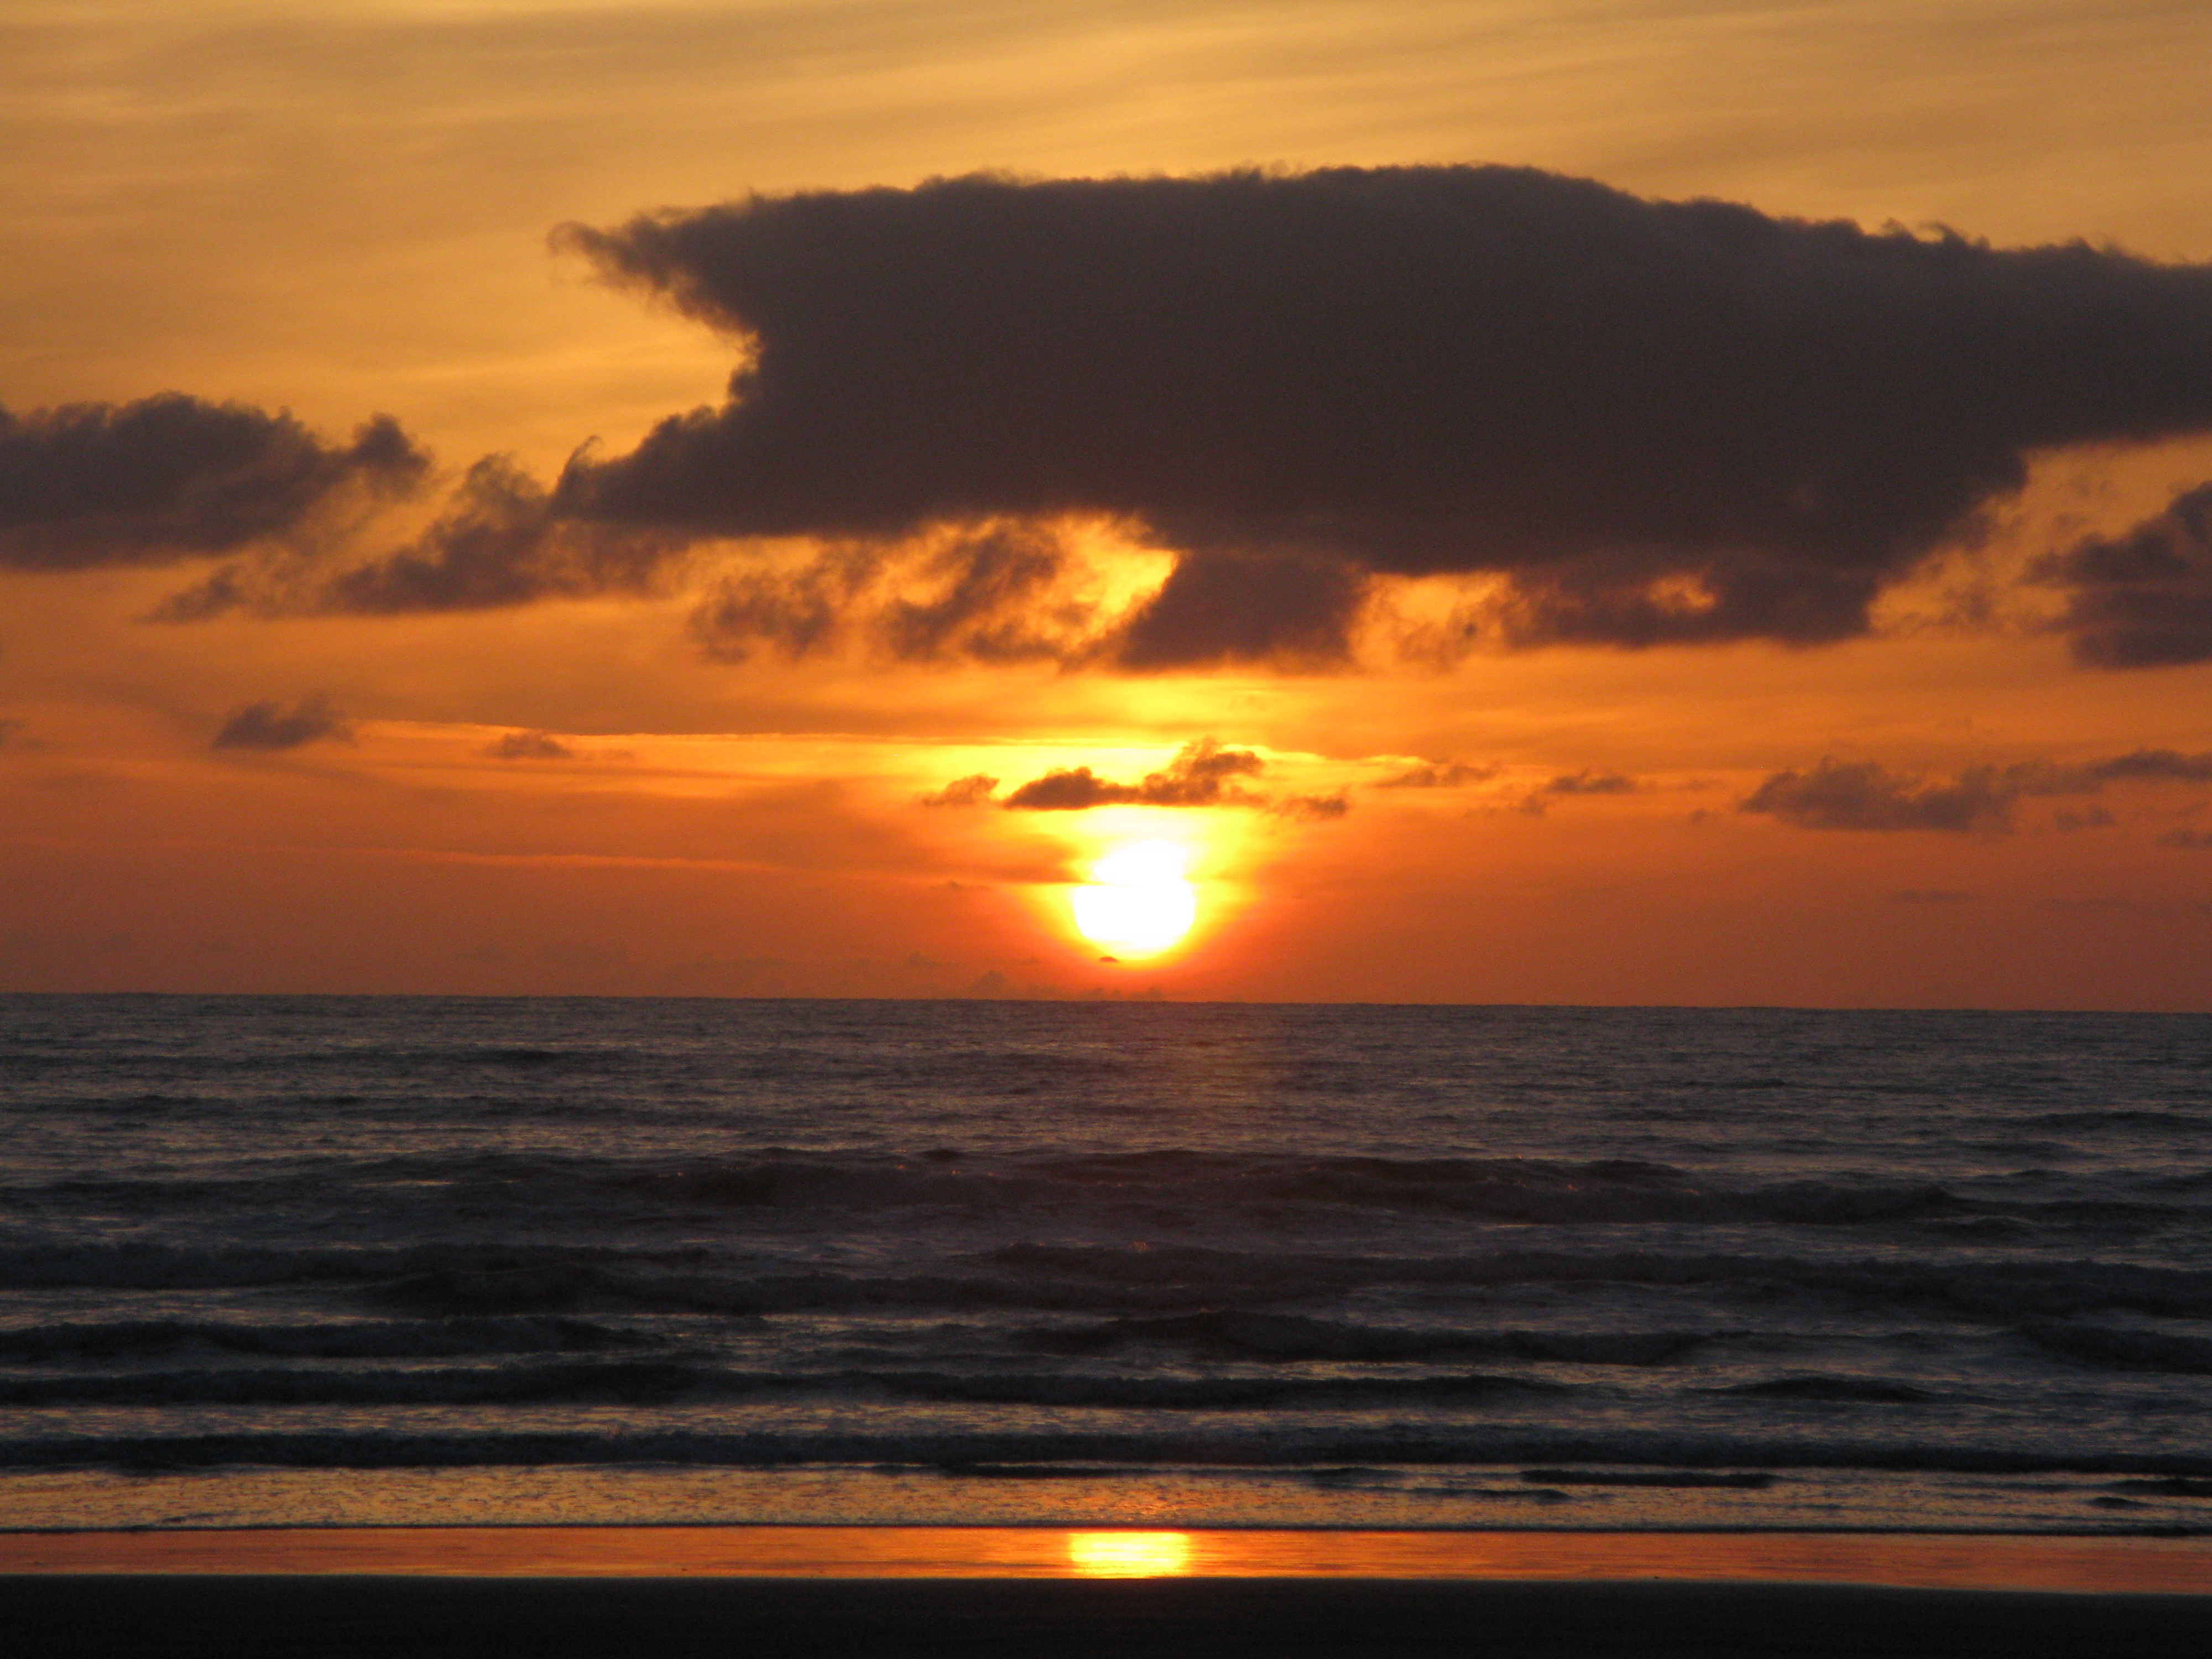 File:Seaside Sunset - Oregon.JPG - Wikimedia Commons